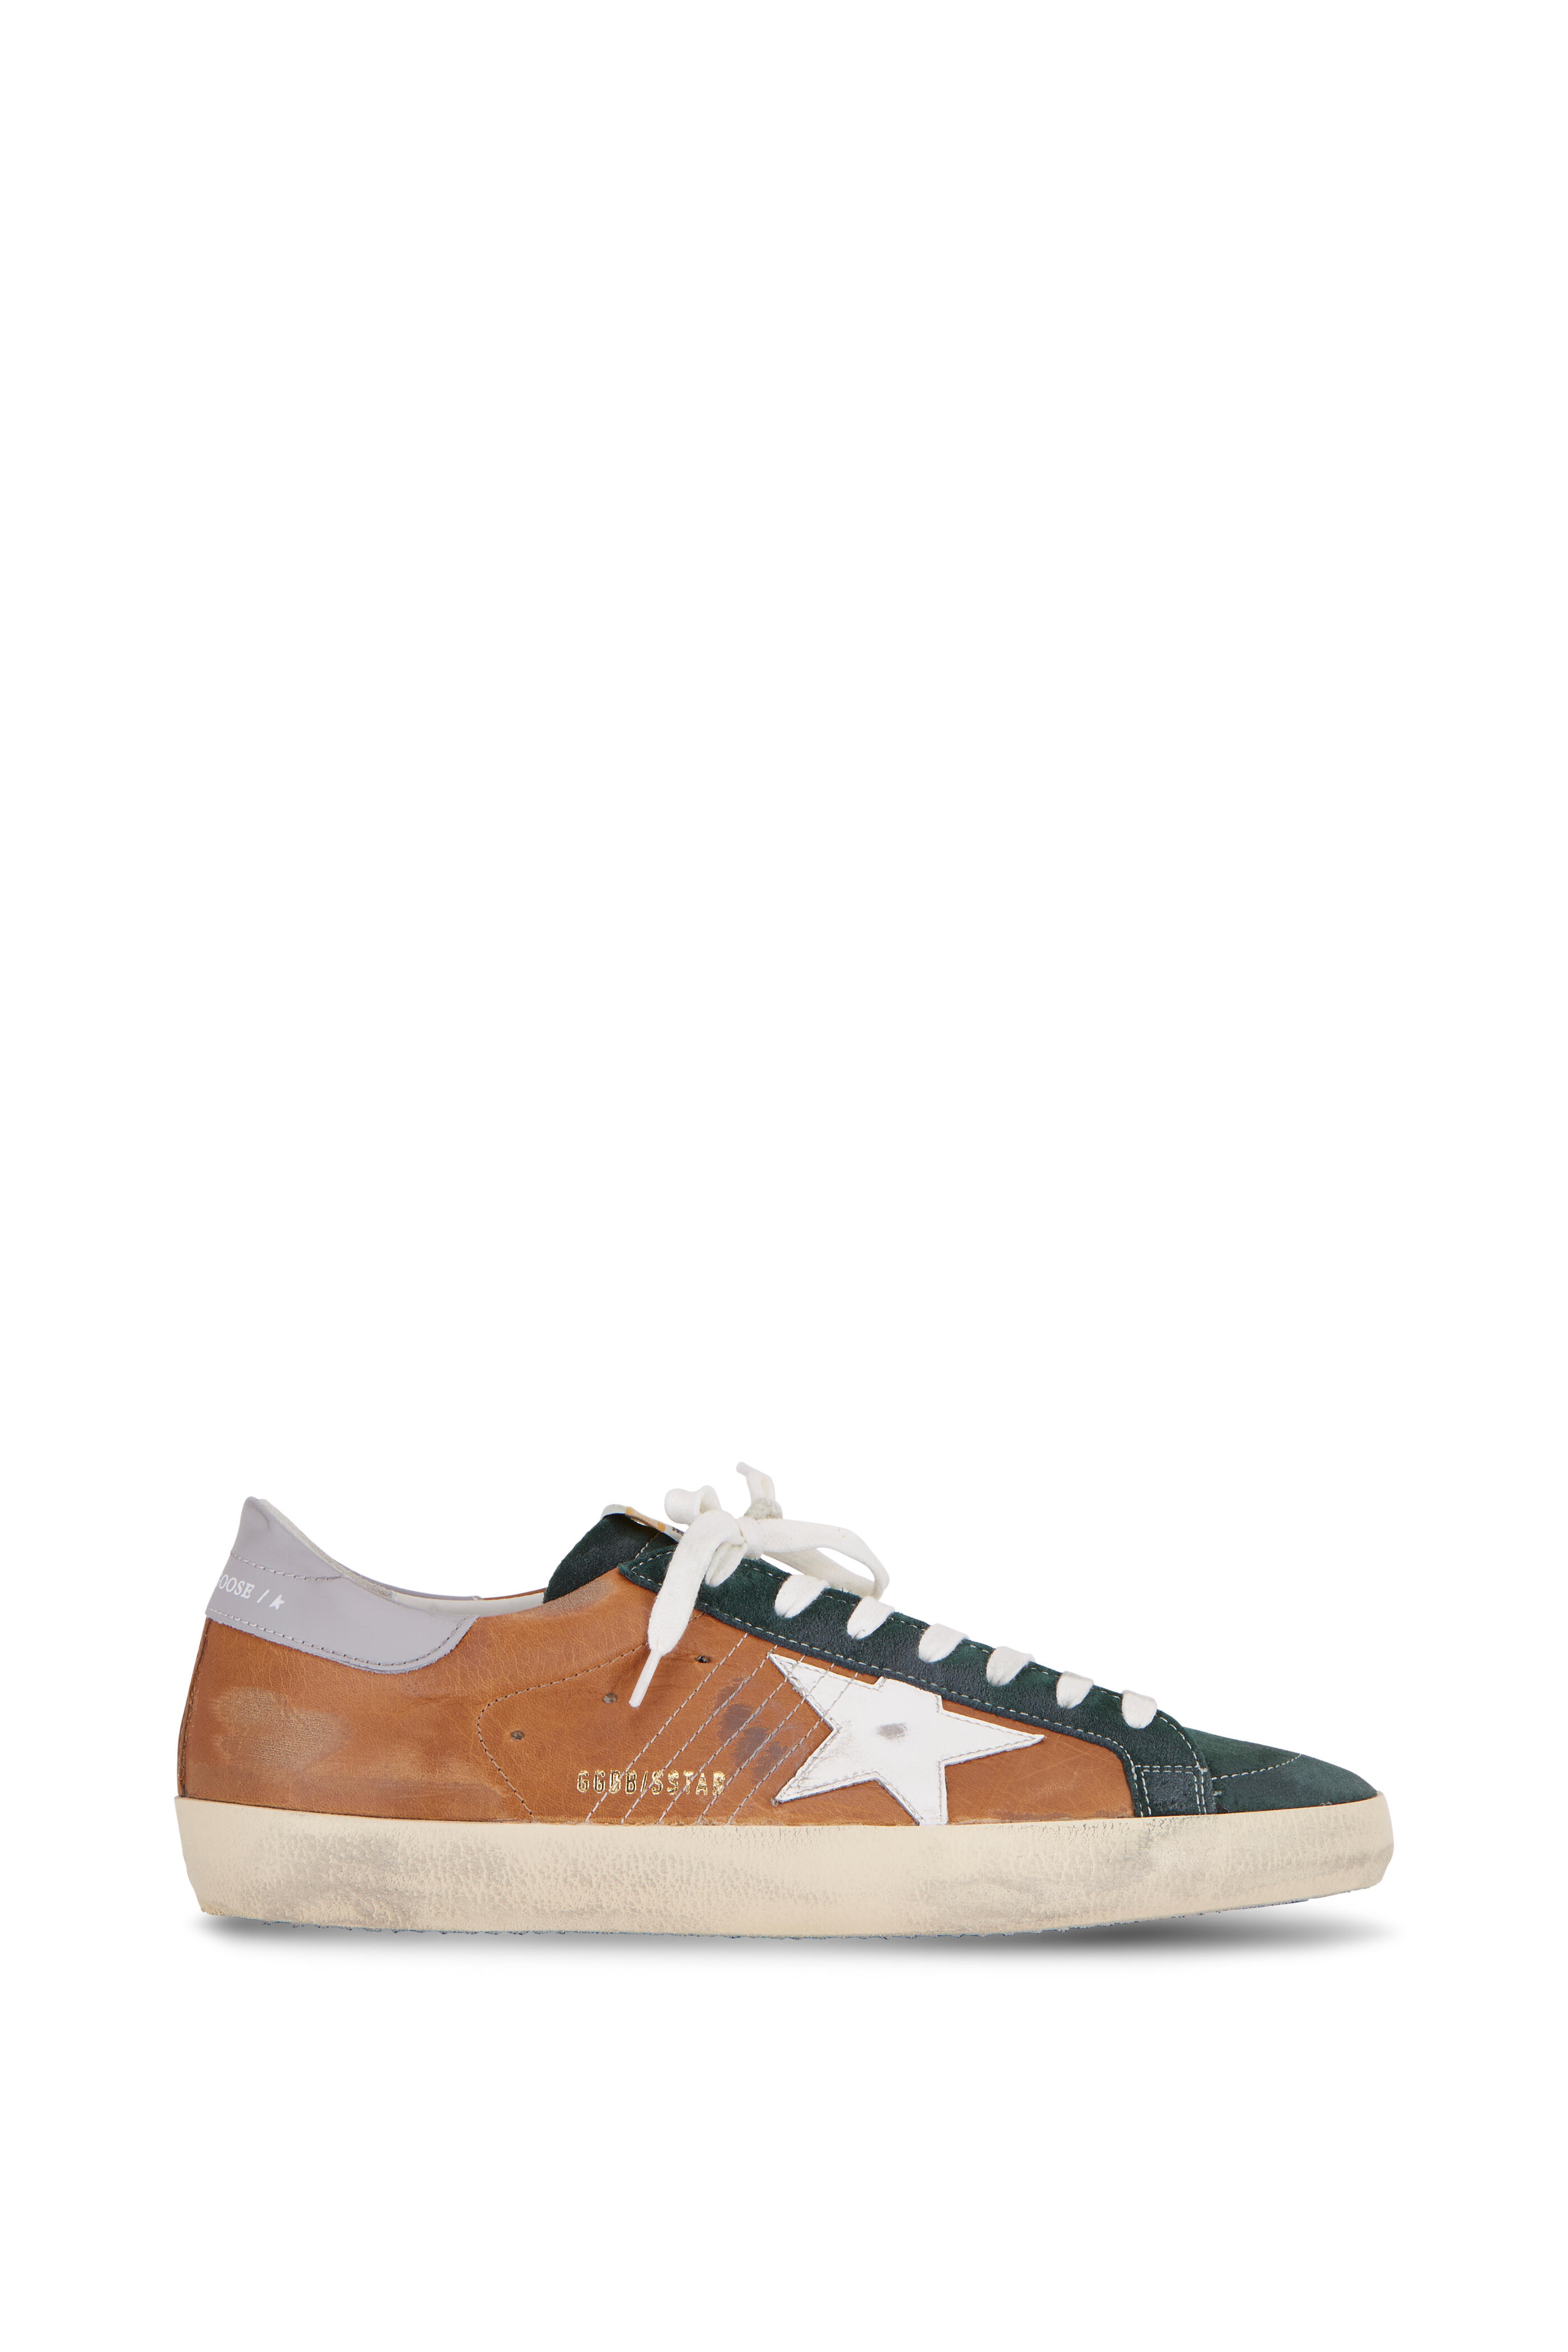 Golden Goose - Super-Star Brown Vintage Leather Low Top Sneaker